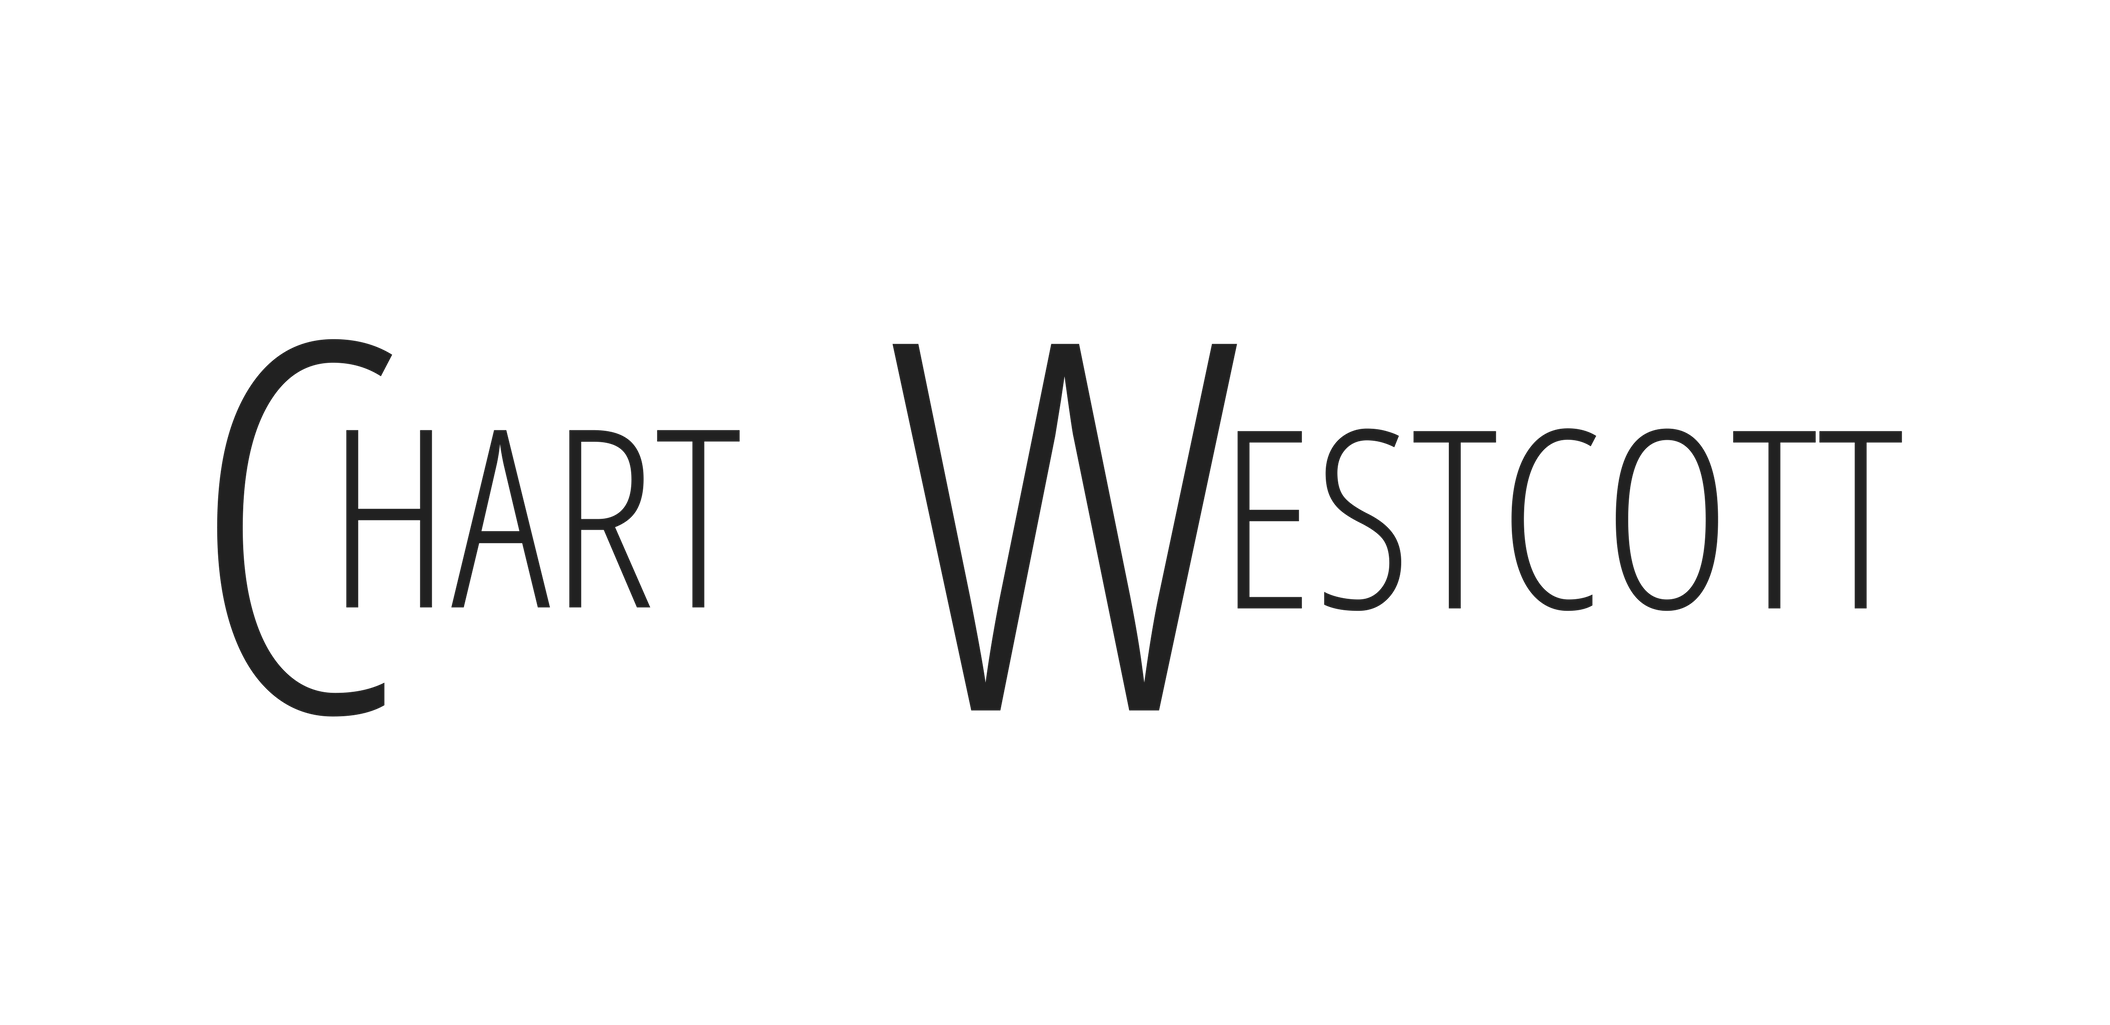 Chart Westcott